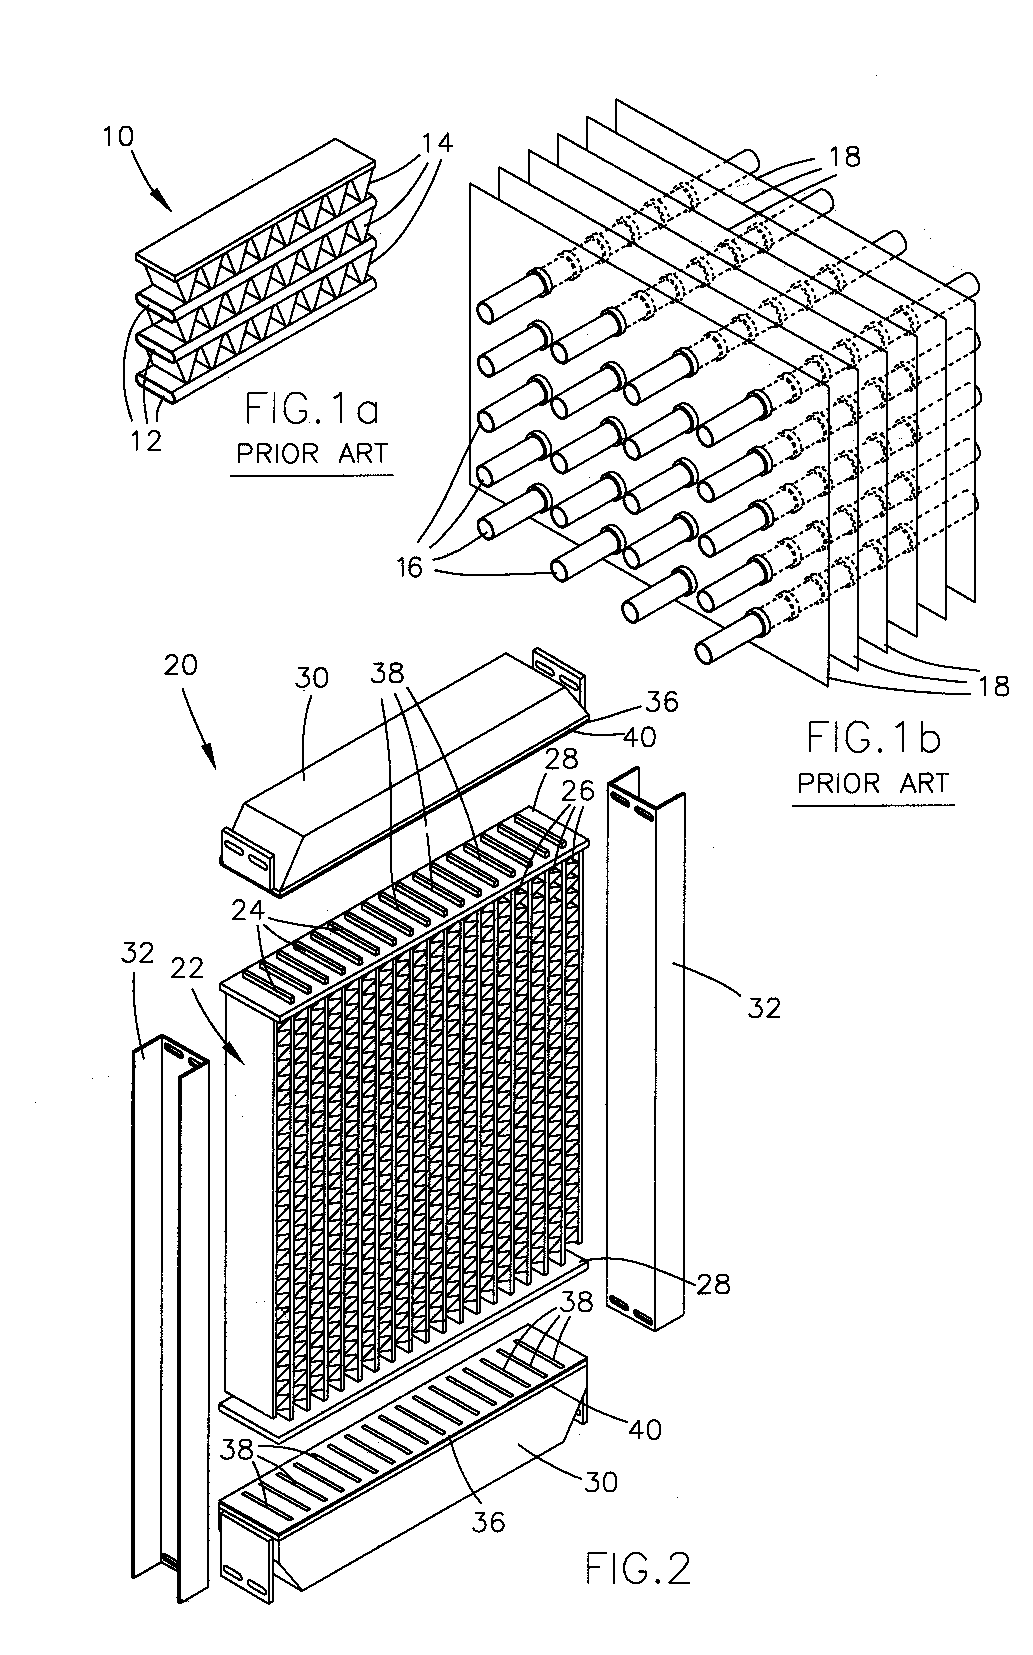 Brazed headerless core assembly for a modular heat exchanger